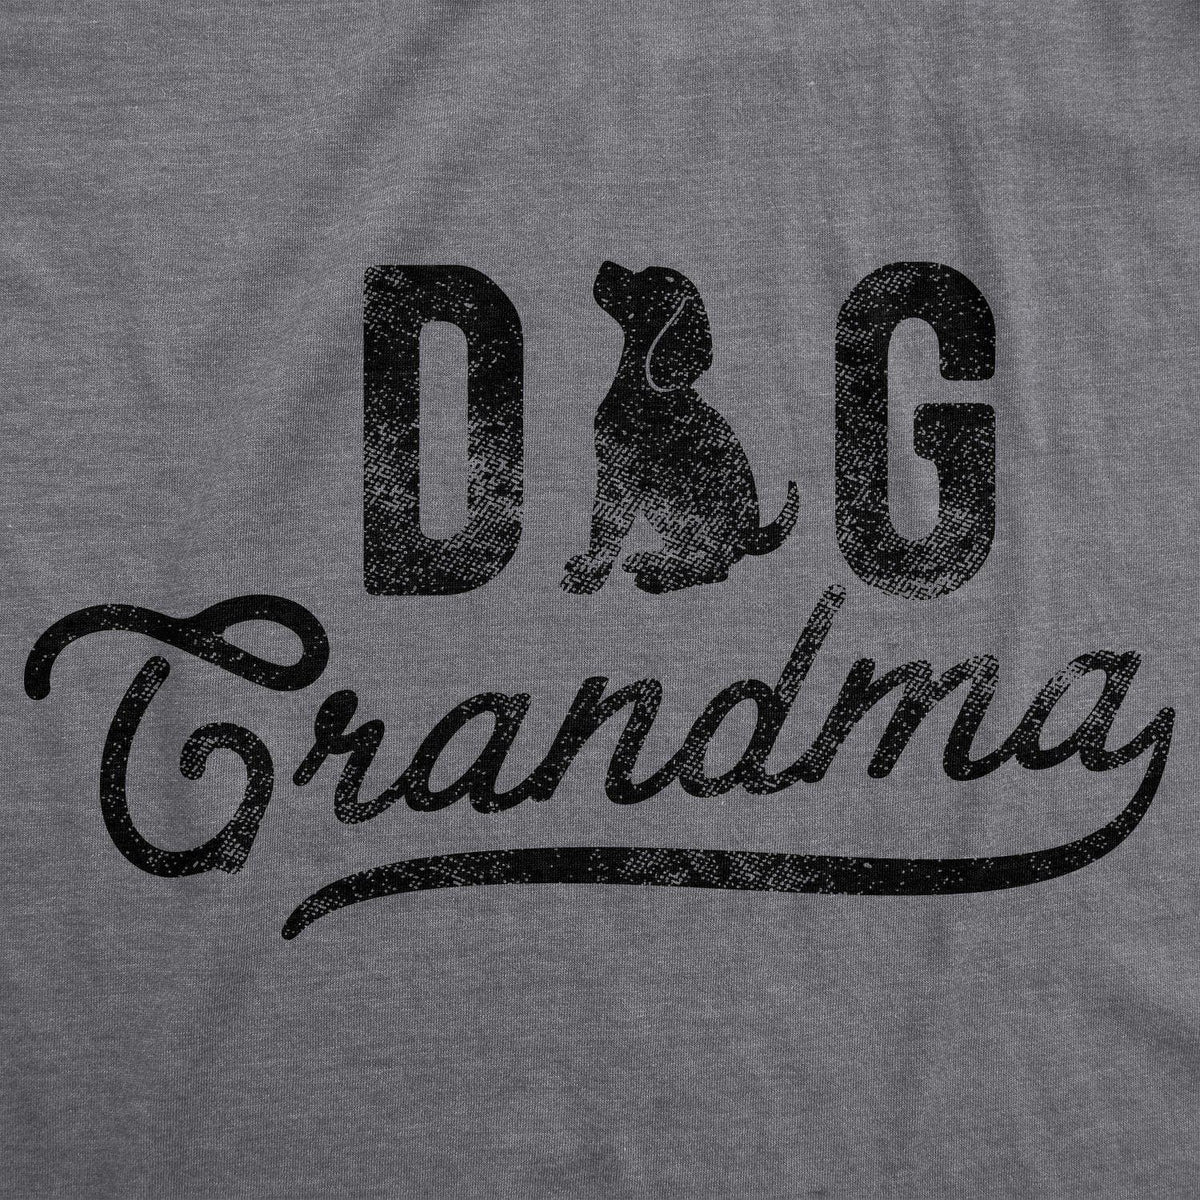 Dog Grandma Women&#39;s Tshirt - Crazy Dog T-Shirts